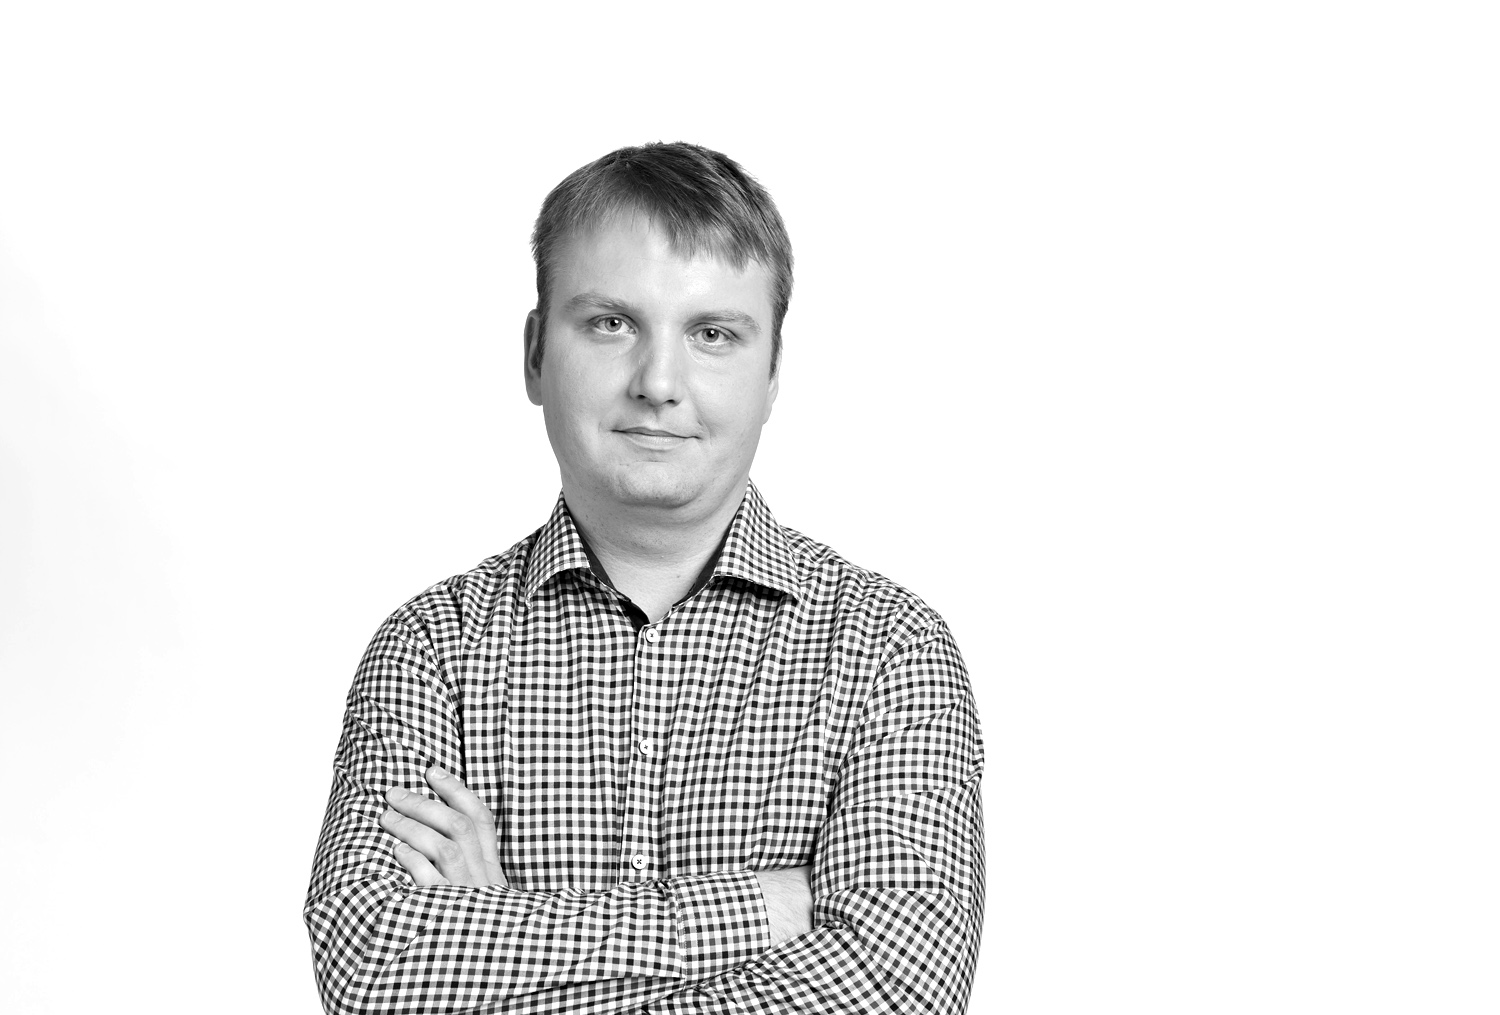 Michal Kokot ist Redakteur bei der linksliberalen Gazeta Wyborcza. / Foto:&amp;nbsp;Pawel Kiszkiel, Agencja Gazeta, n-ost